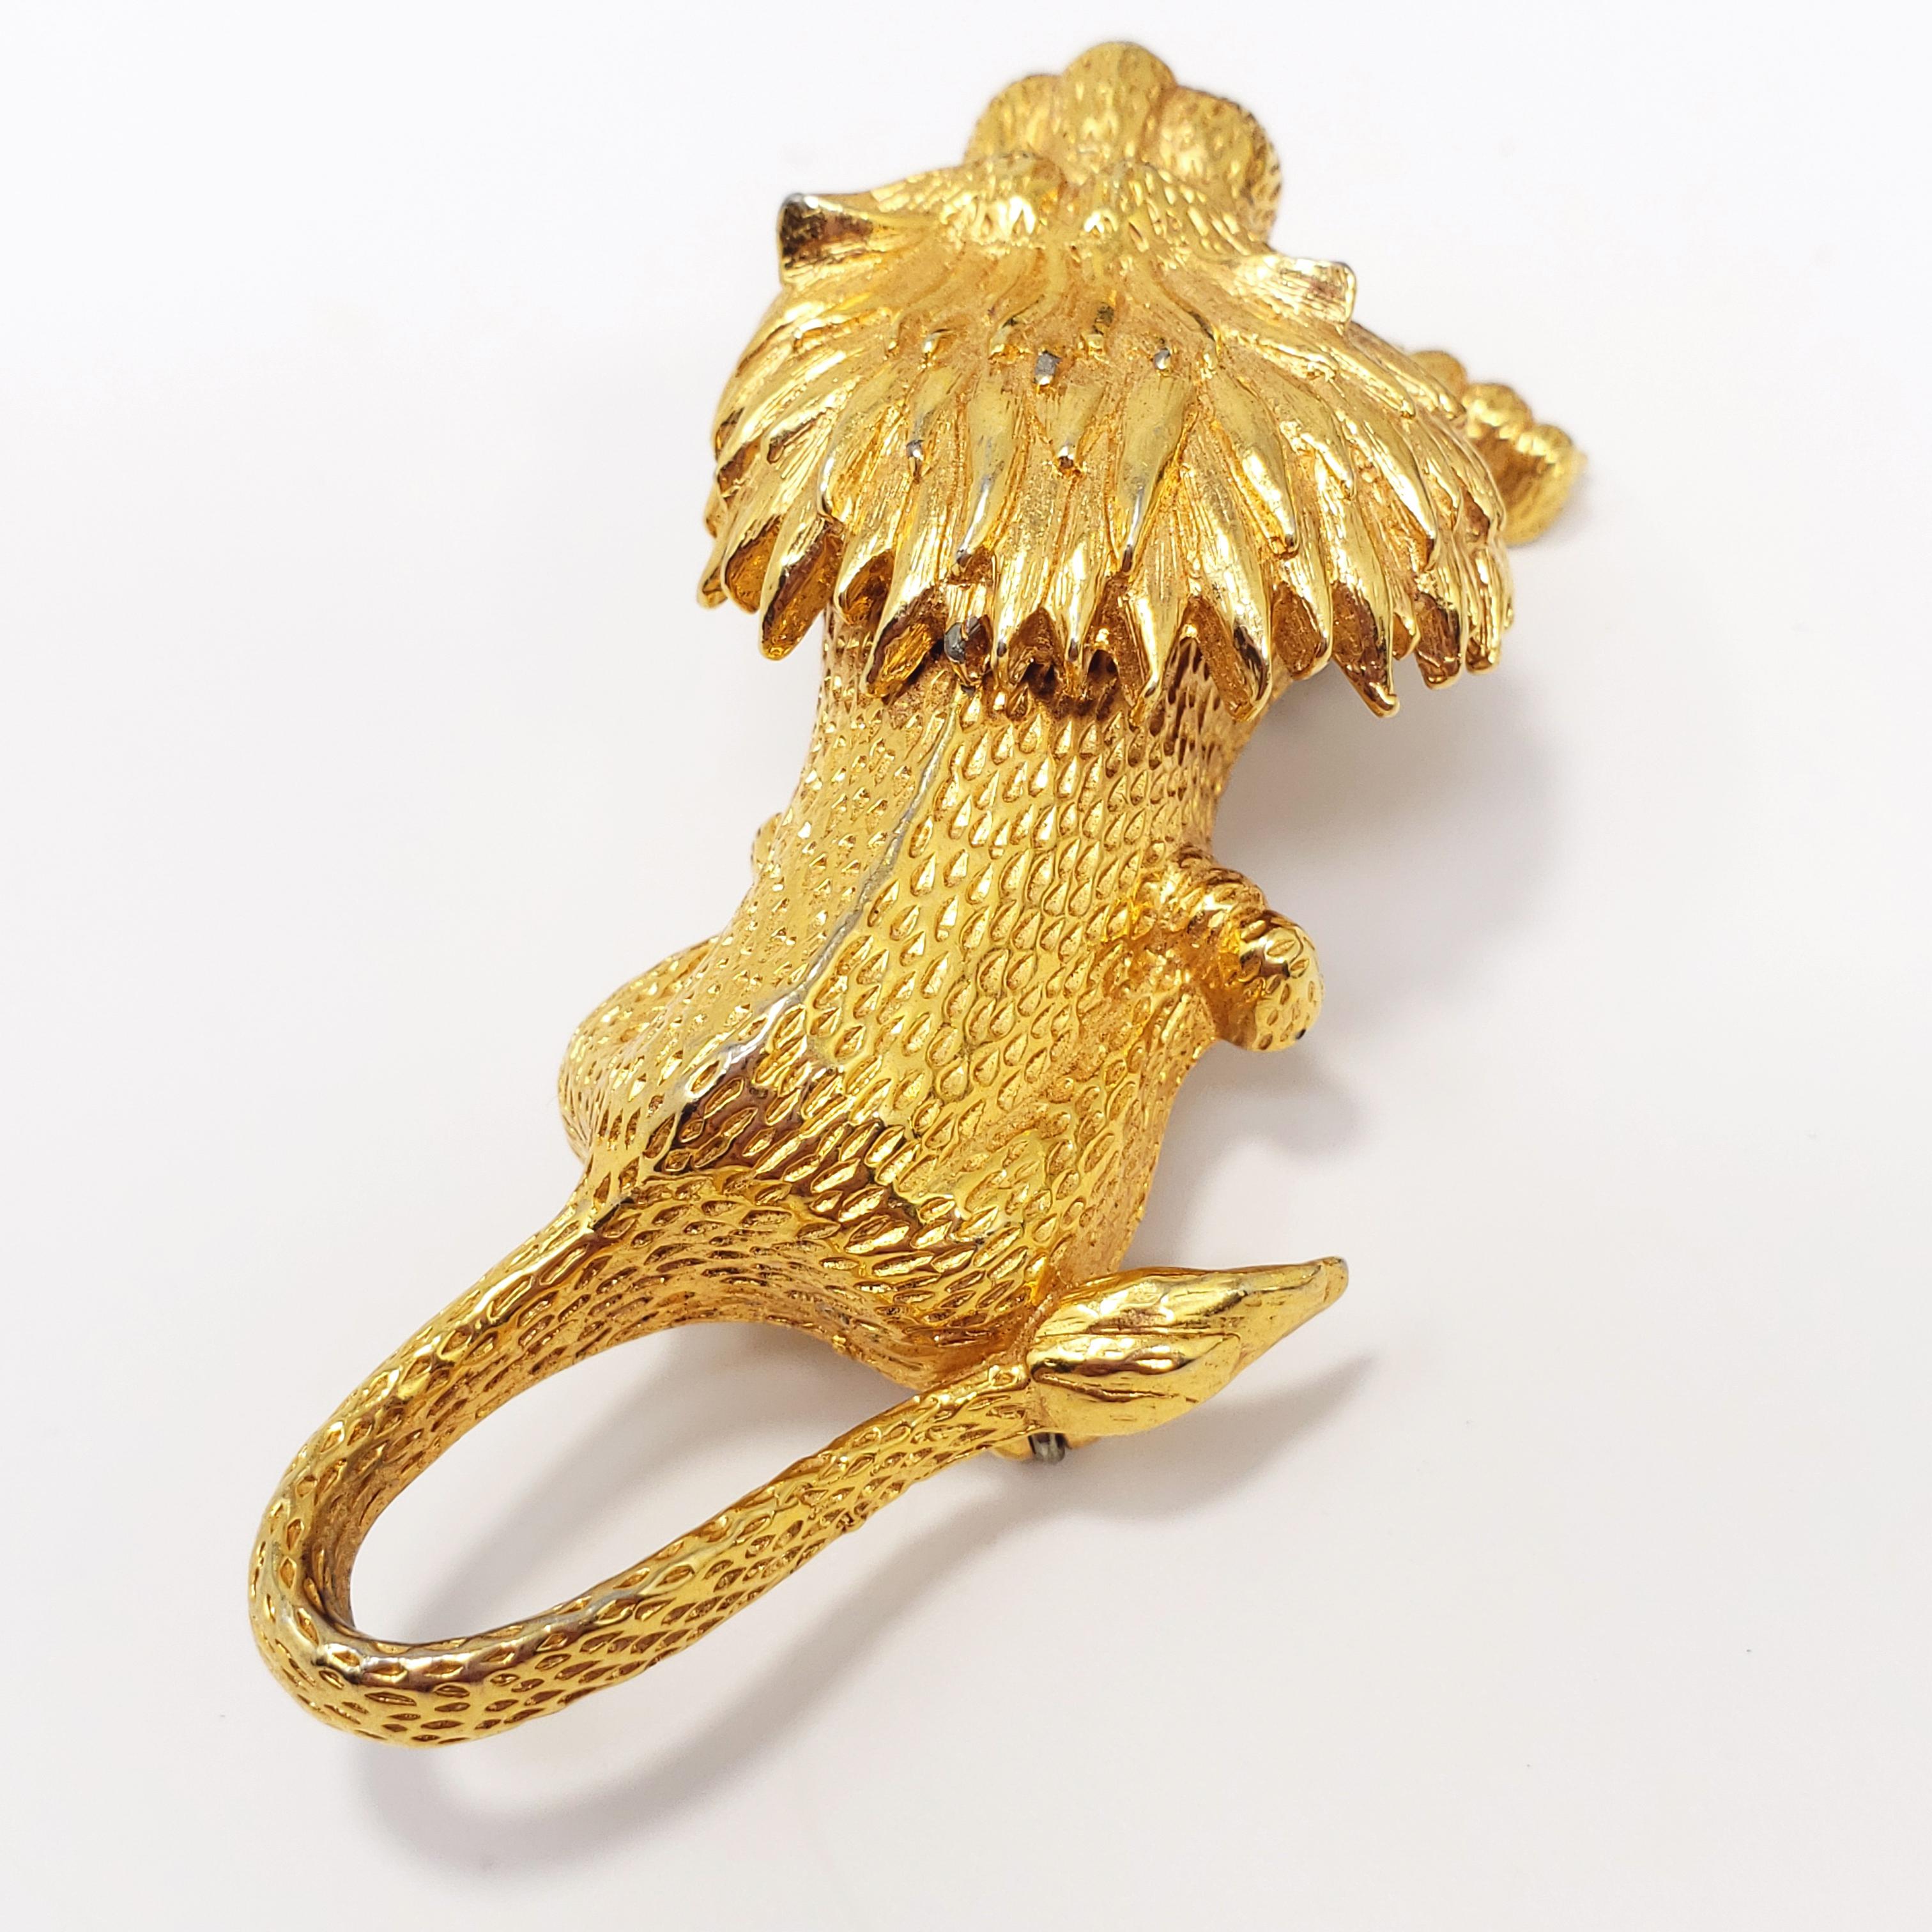 Retro Vintage Jomaz Textured Lion Pin Brooch in Gold